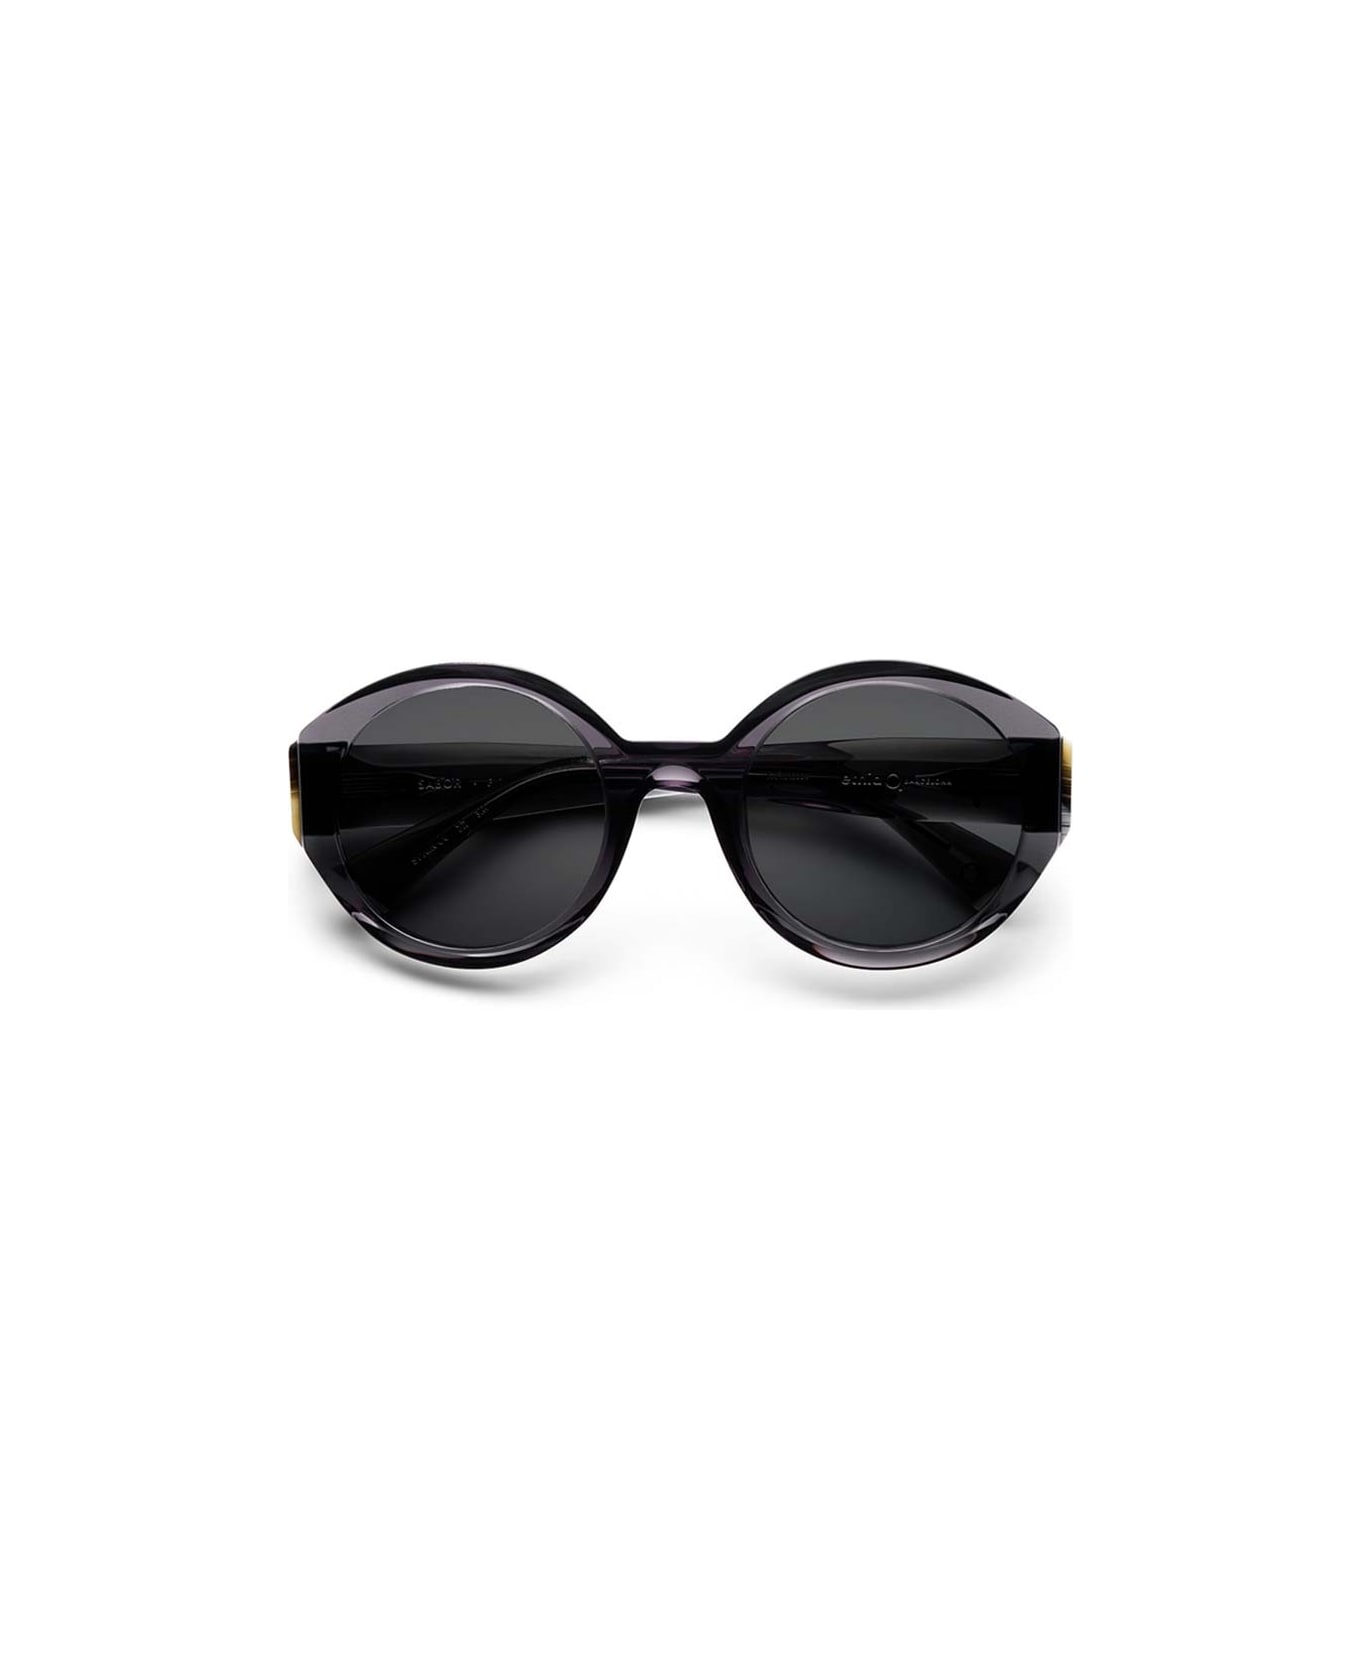 Etnia Barcelona Sunglasses - Nero/Grigio